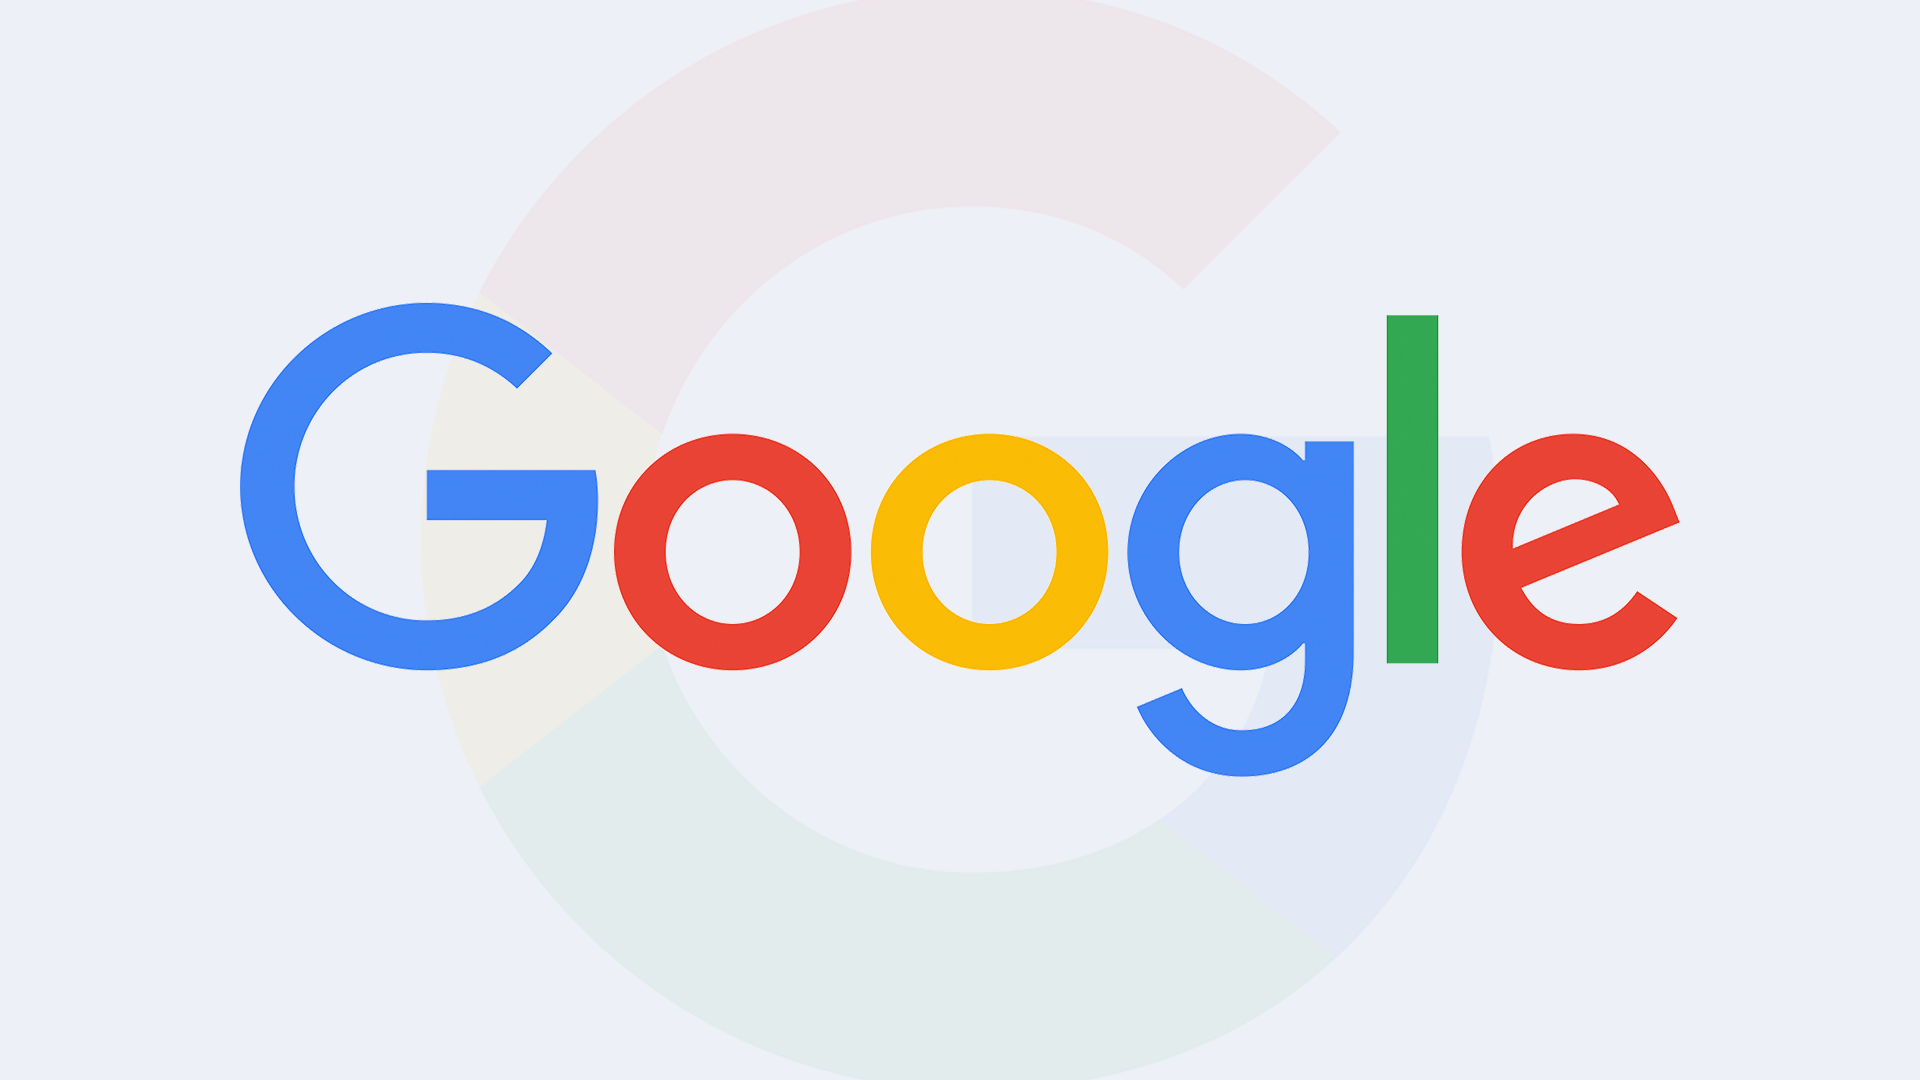 New Google logo - unofficial 